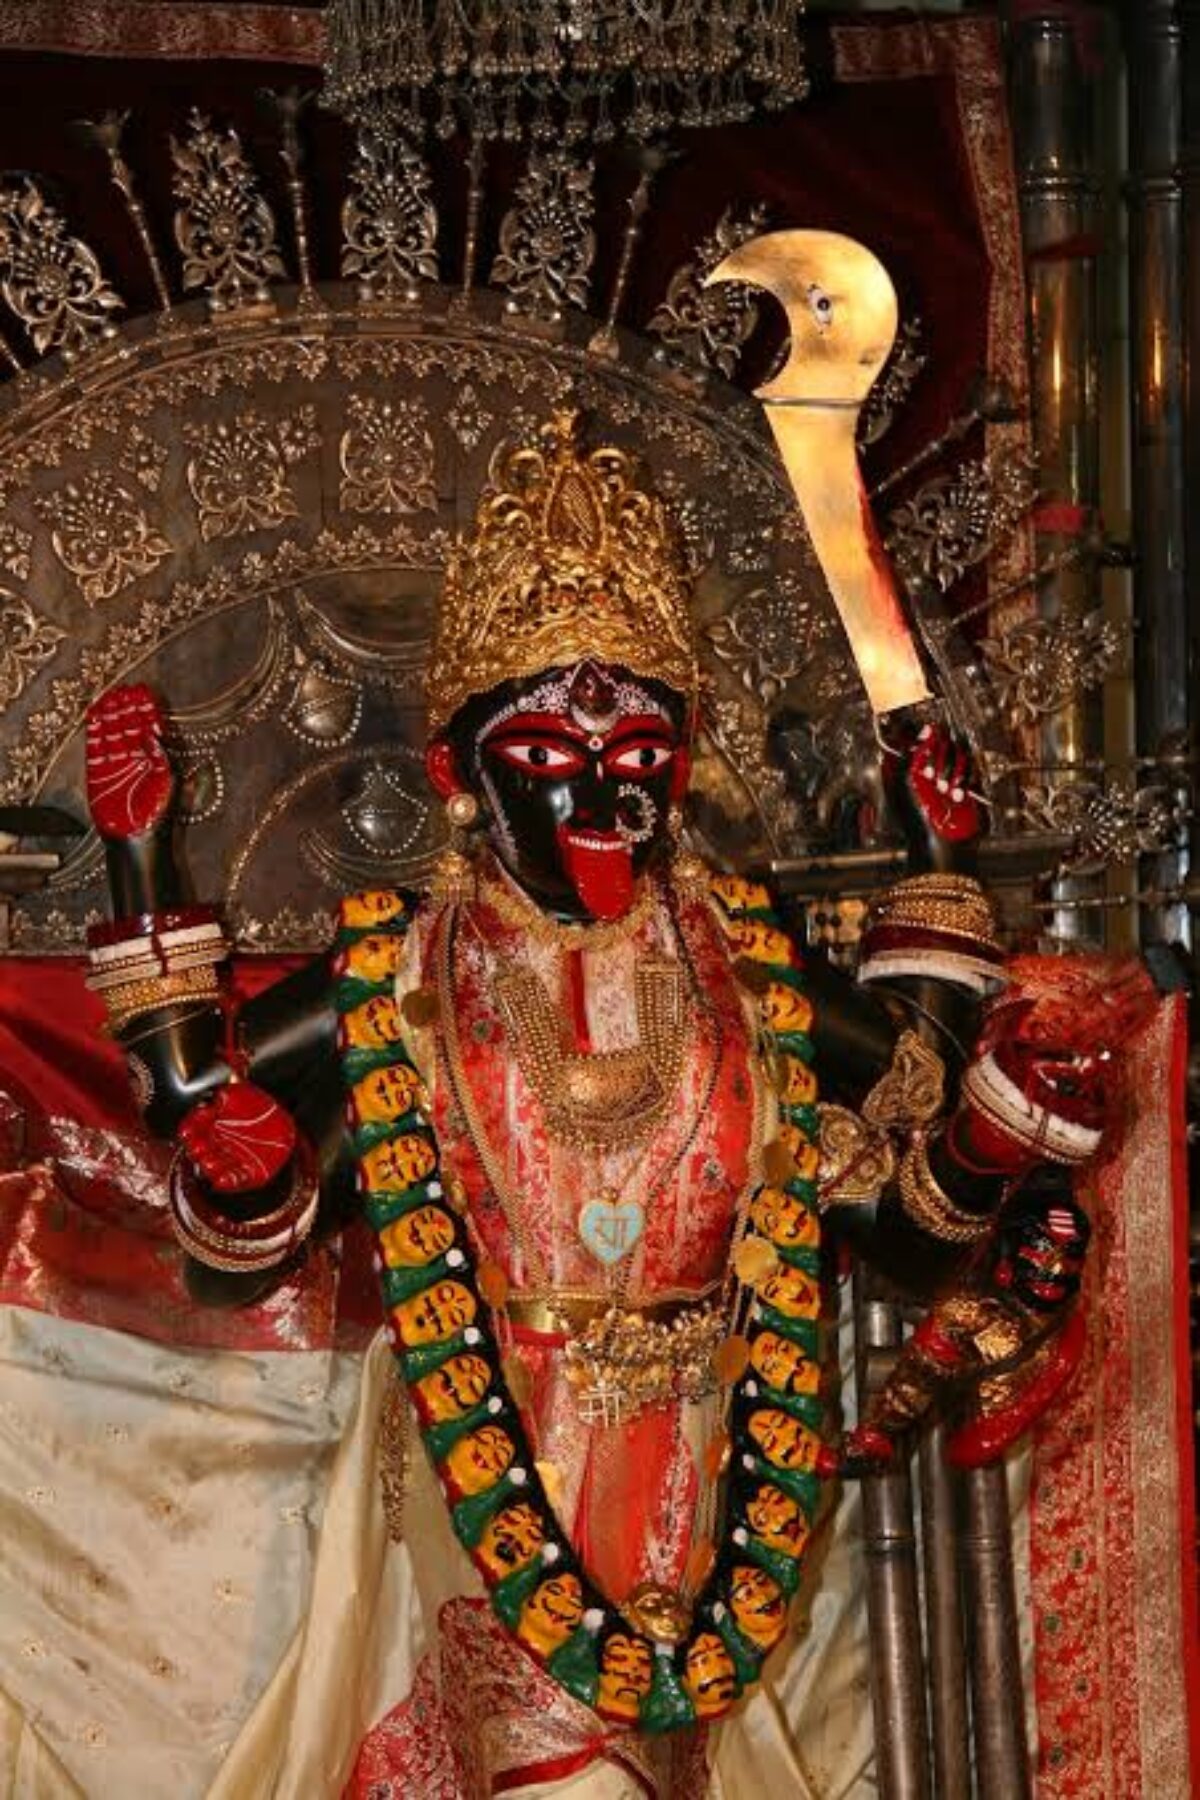 dakshineswar kali temple